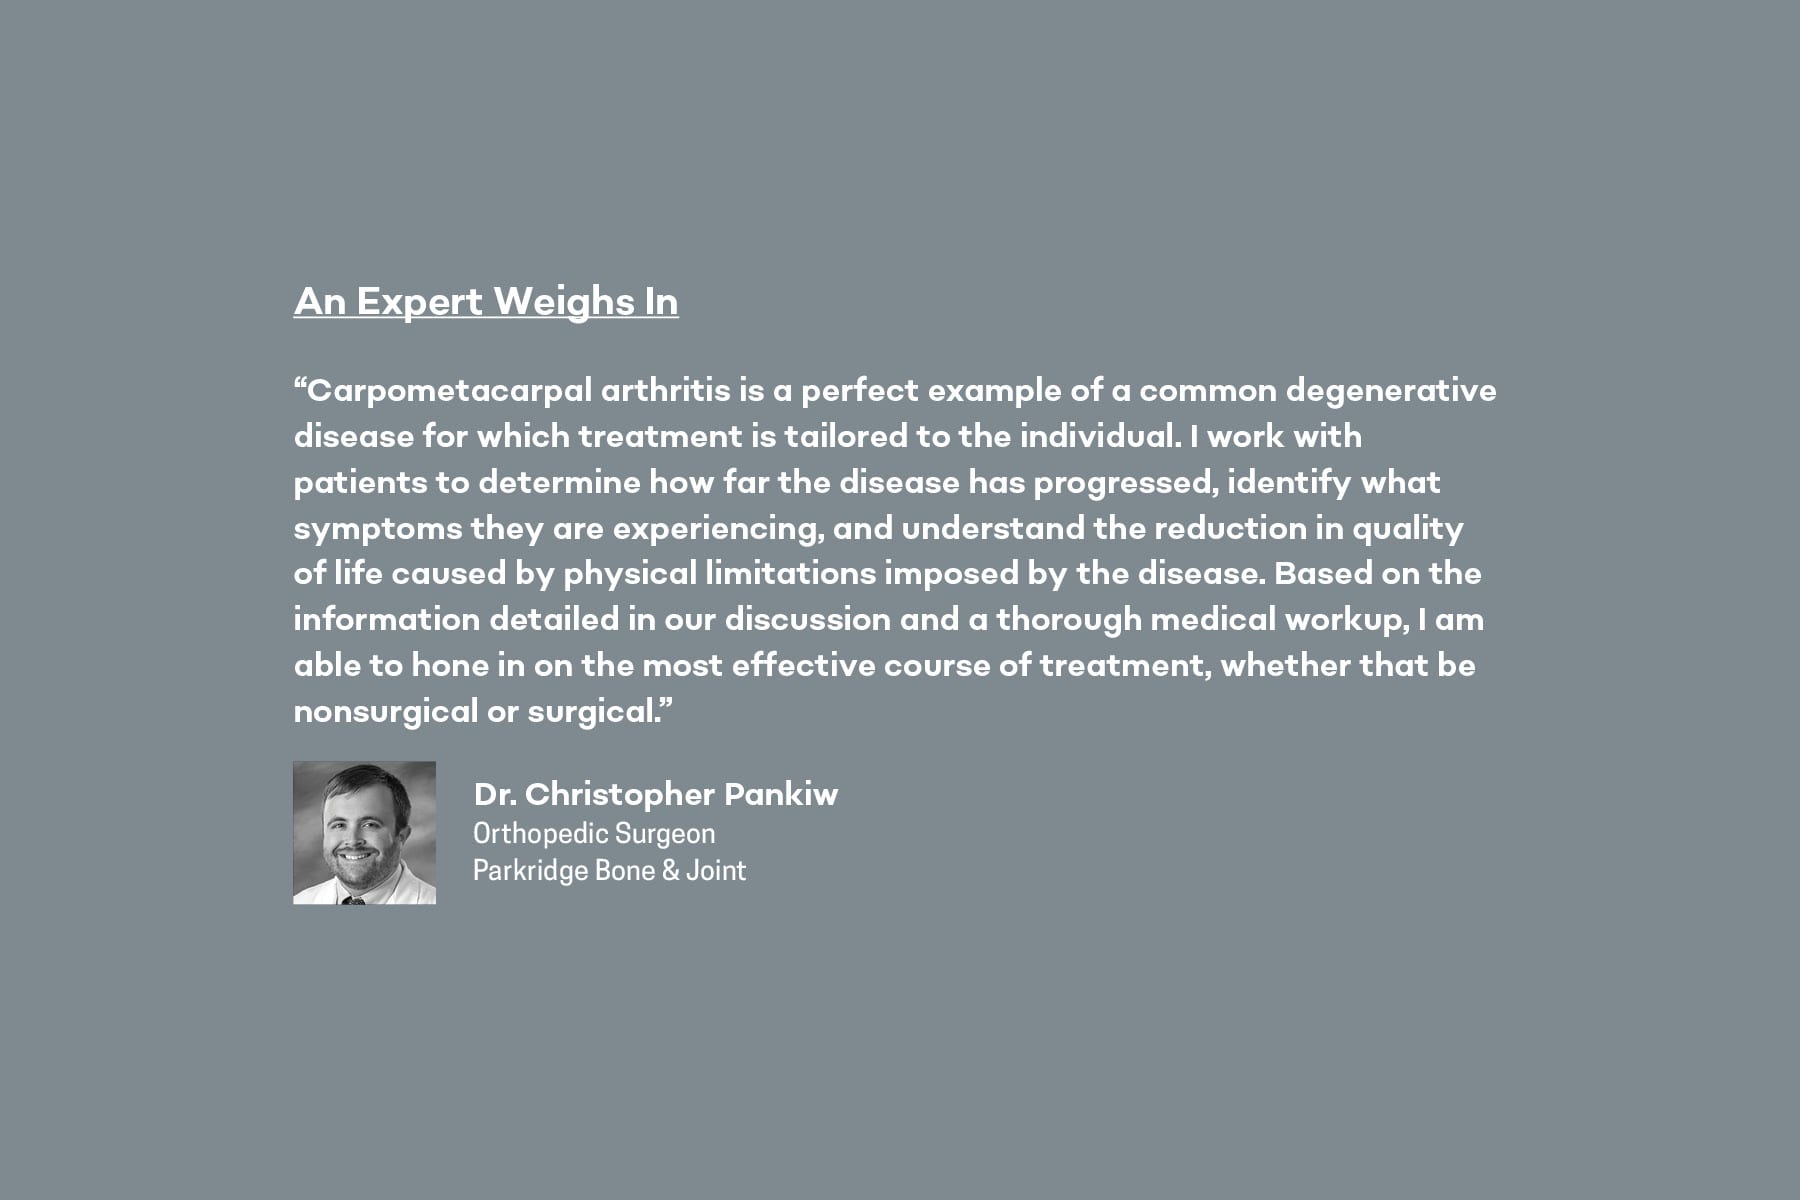 Dr. Christopher Pankiw Orthopedic Surgeon Parkridge Bone & Joint shares expert advice on carpometacarpal arthritis